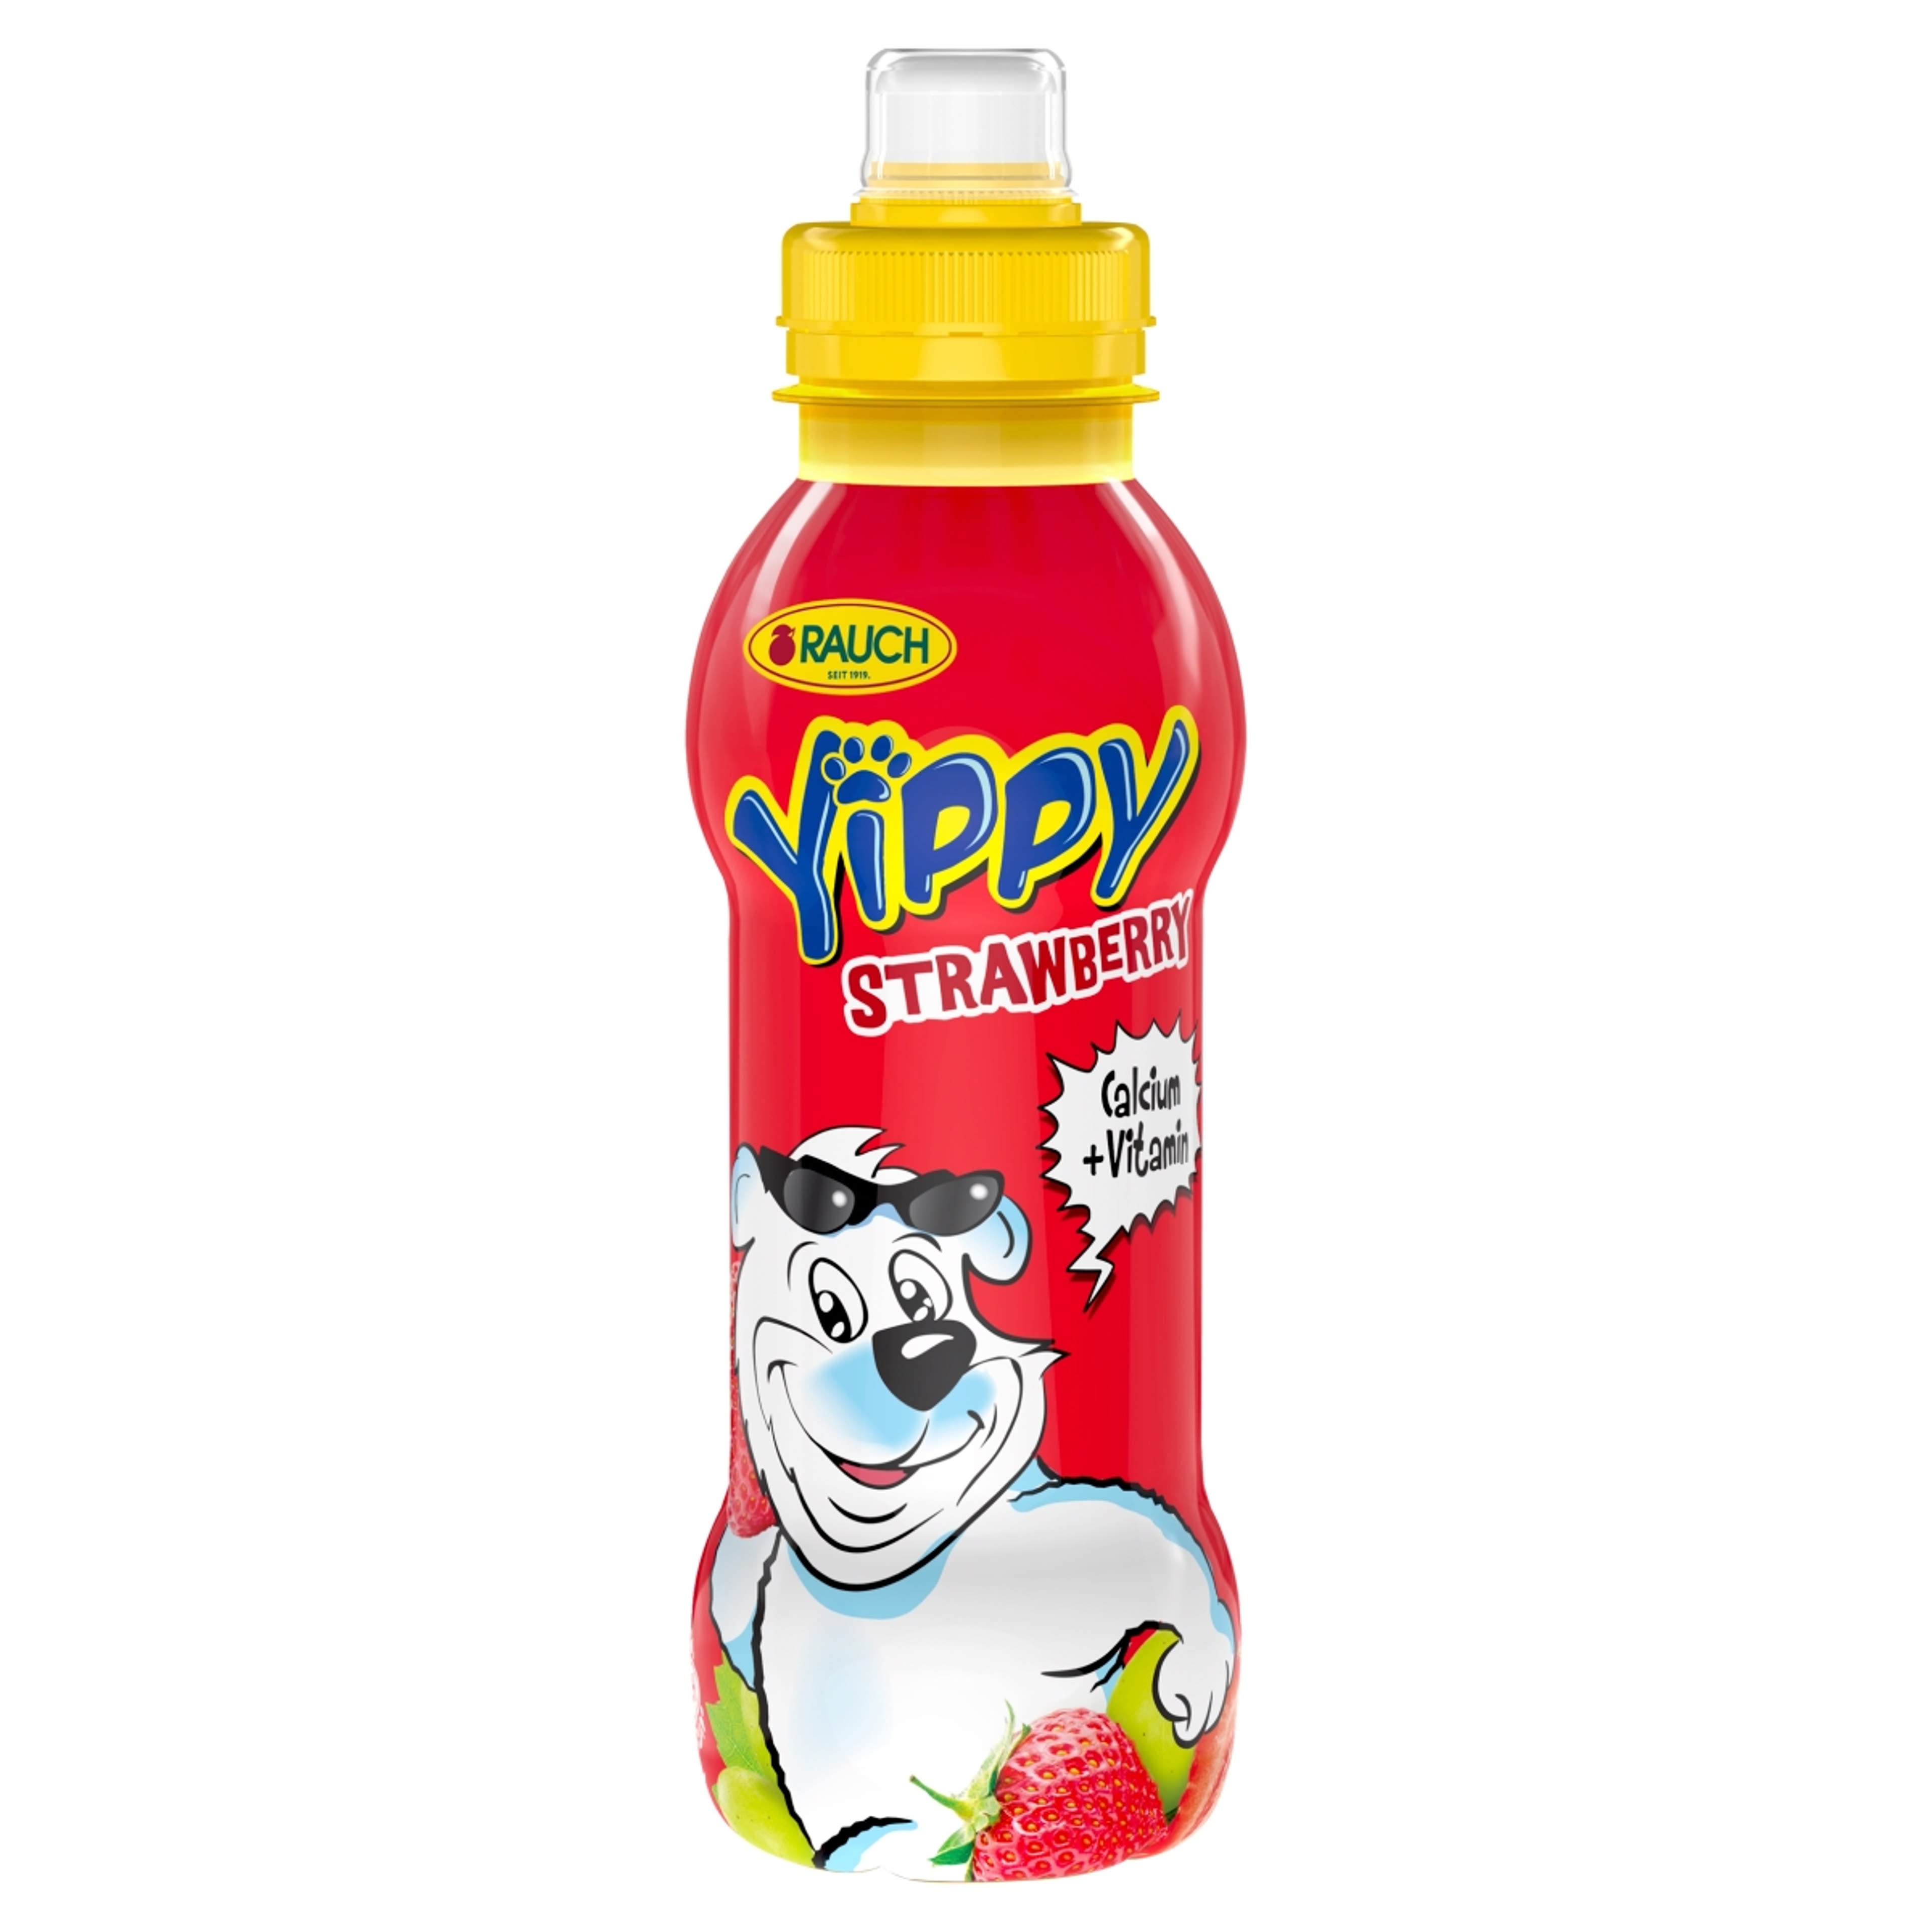 Yippy strawberry - 330 ml